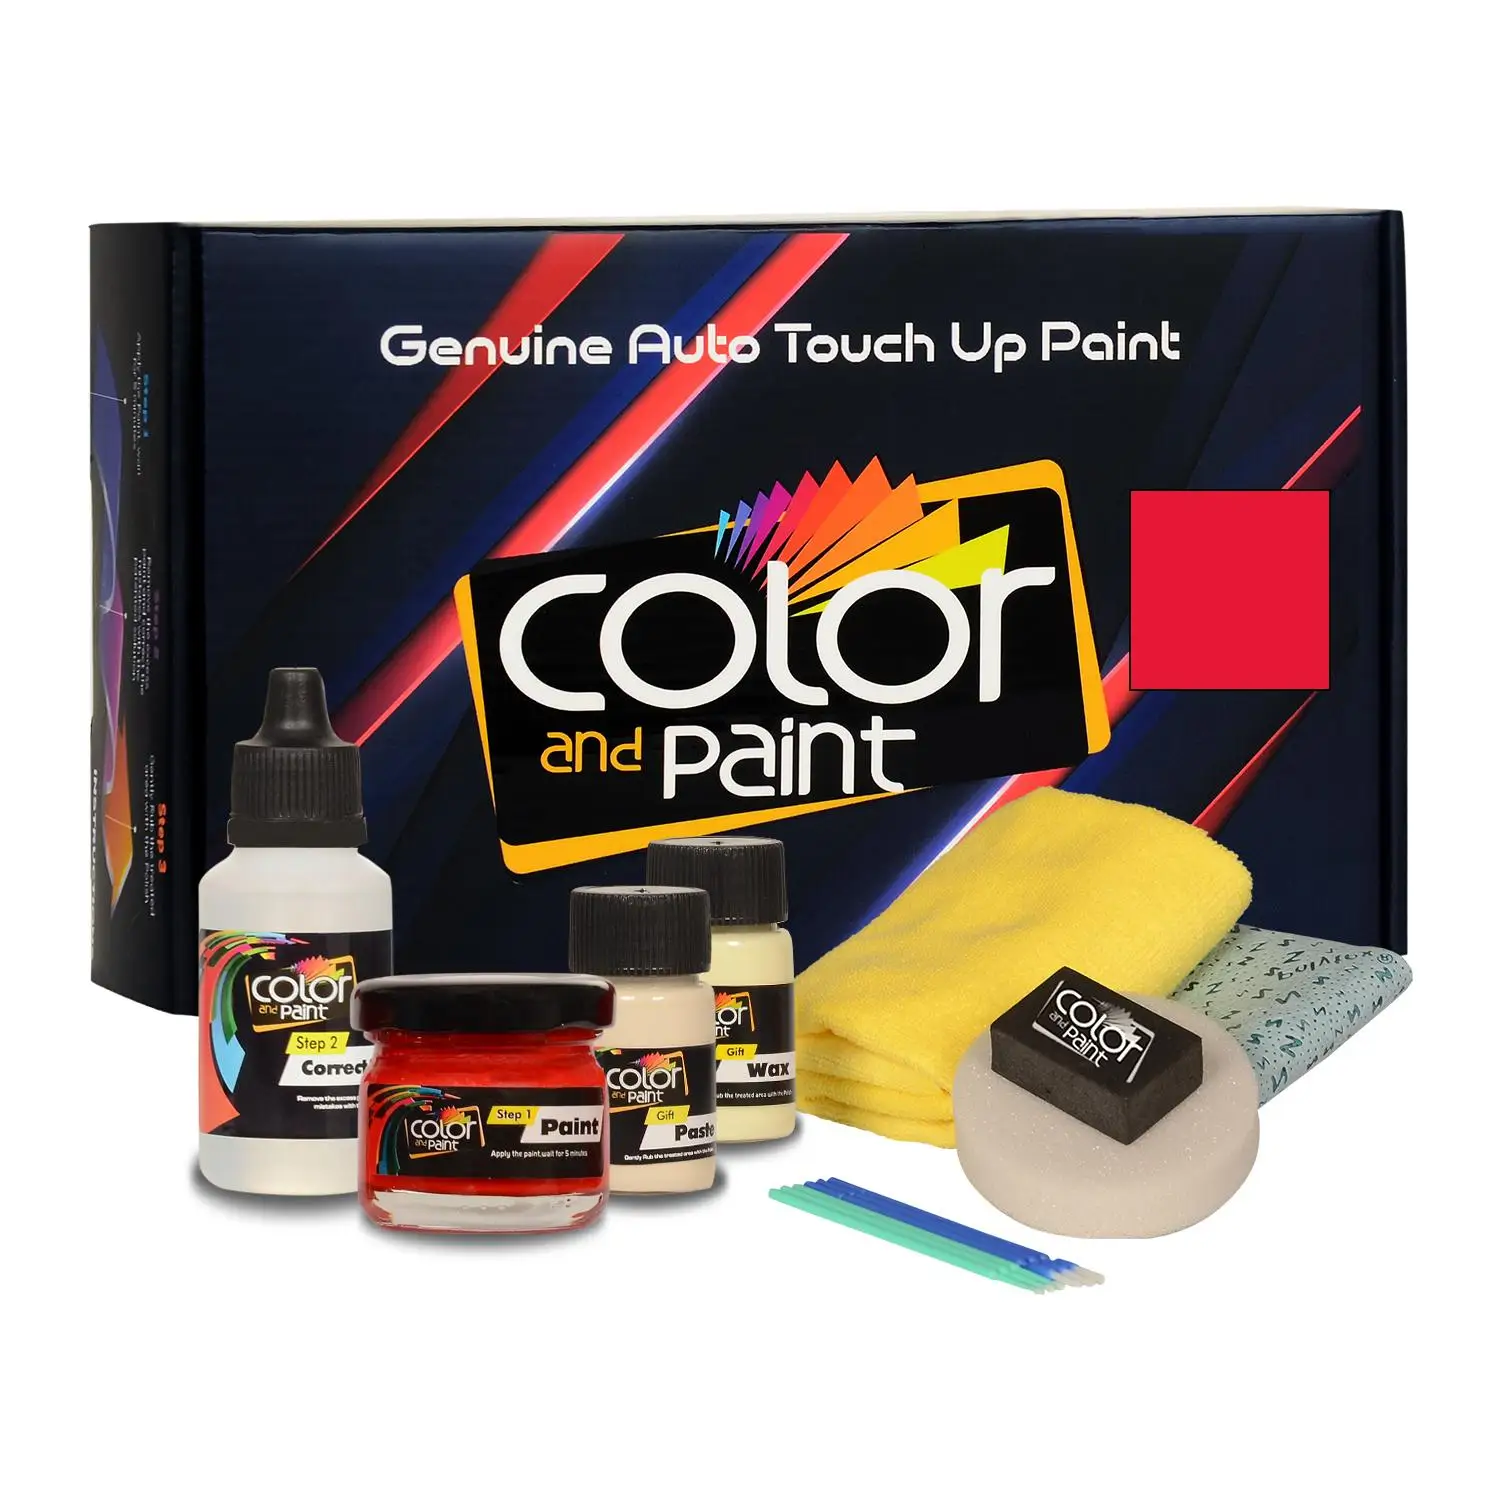 Color and Paint compatible with Nissan Automotive Touch Up Paint - REGAL MIST MET - 926 - Basic Care